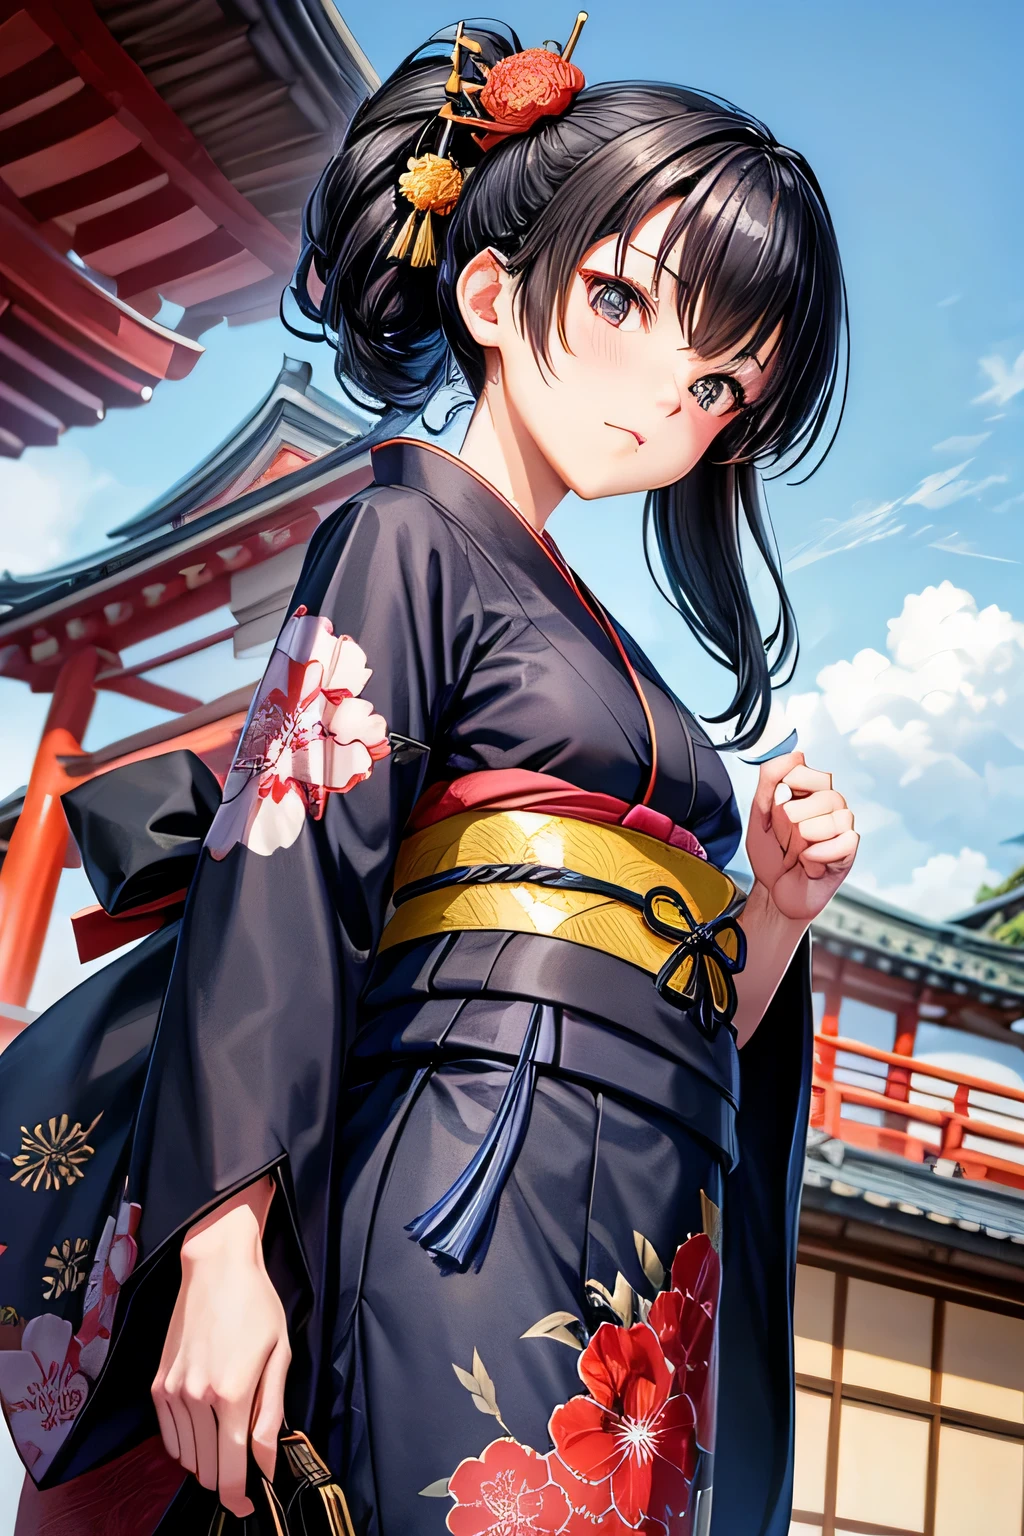 Kimono appearance、Beautiful Female Ninja、Black Hair Upstyle、((whole body))、(((photo taken from below)))、Japan townscape of the Edo period